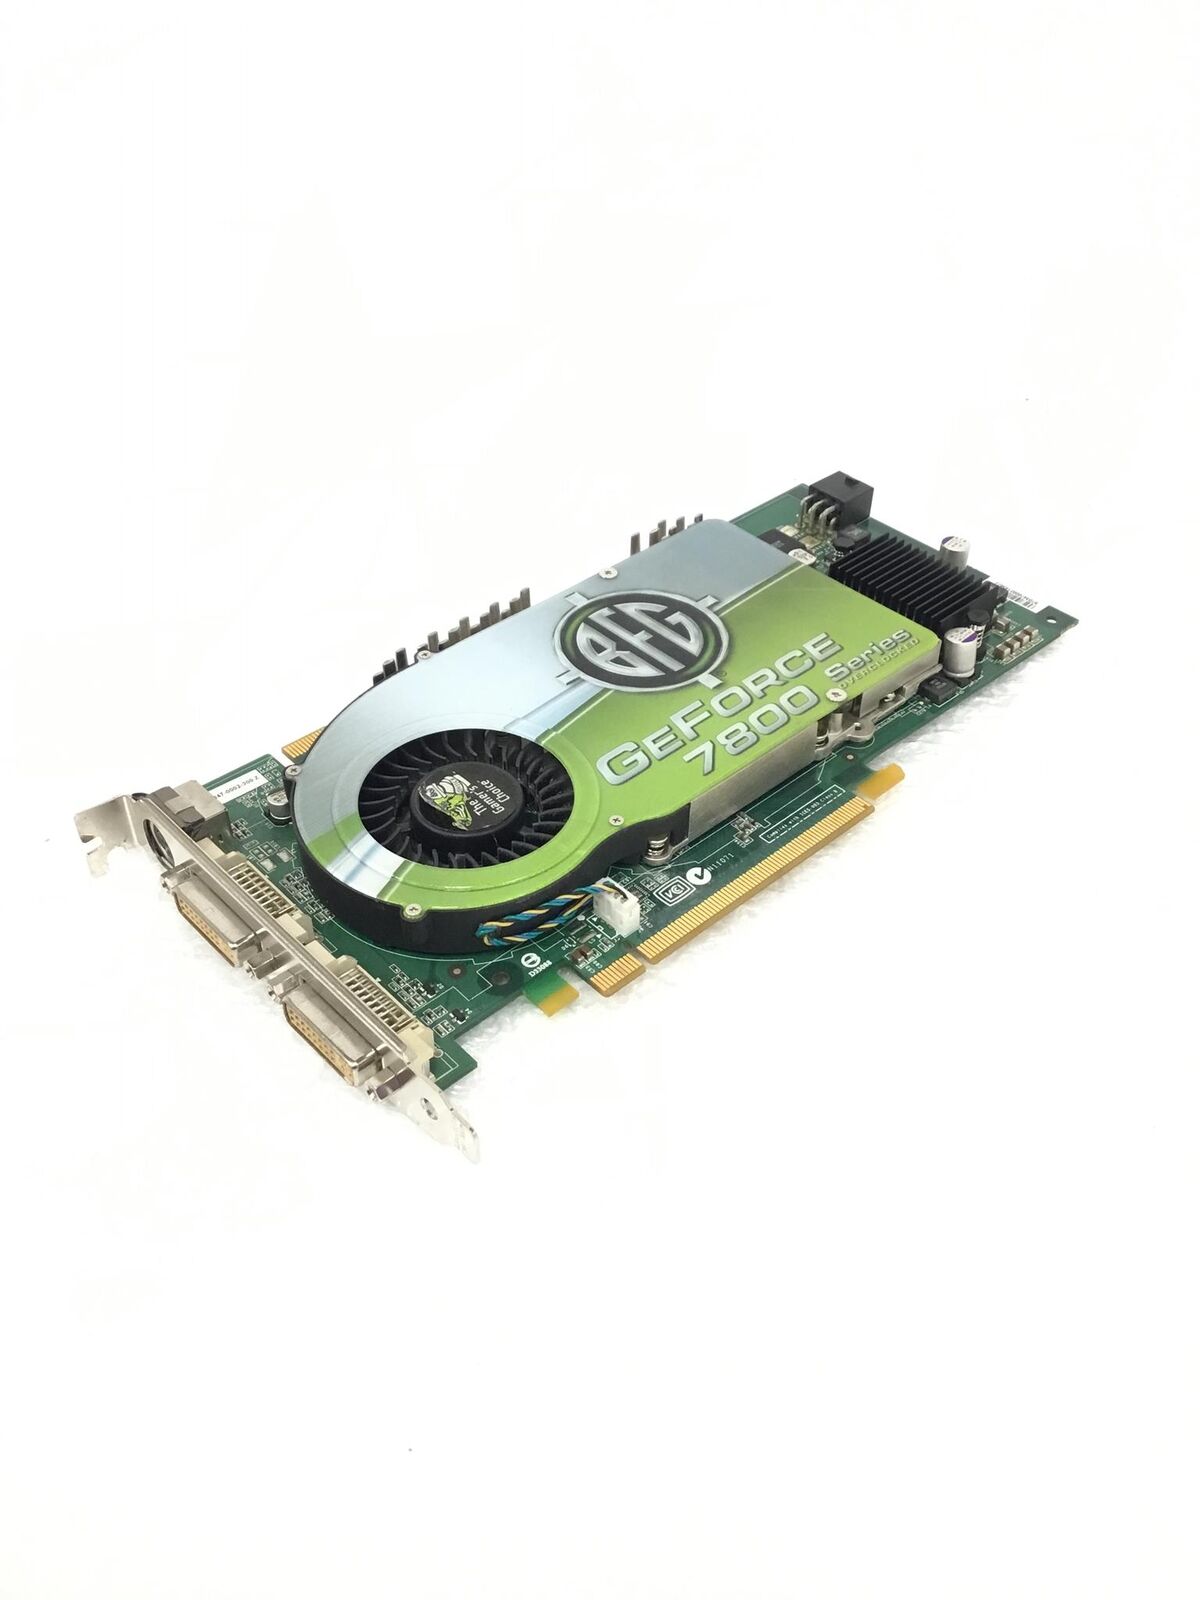 GeForce 7800 GTX OC 256MB DDR3 PCI Express (PCI-E) Dual DVI Video Card w/TV-out